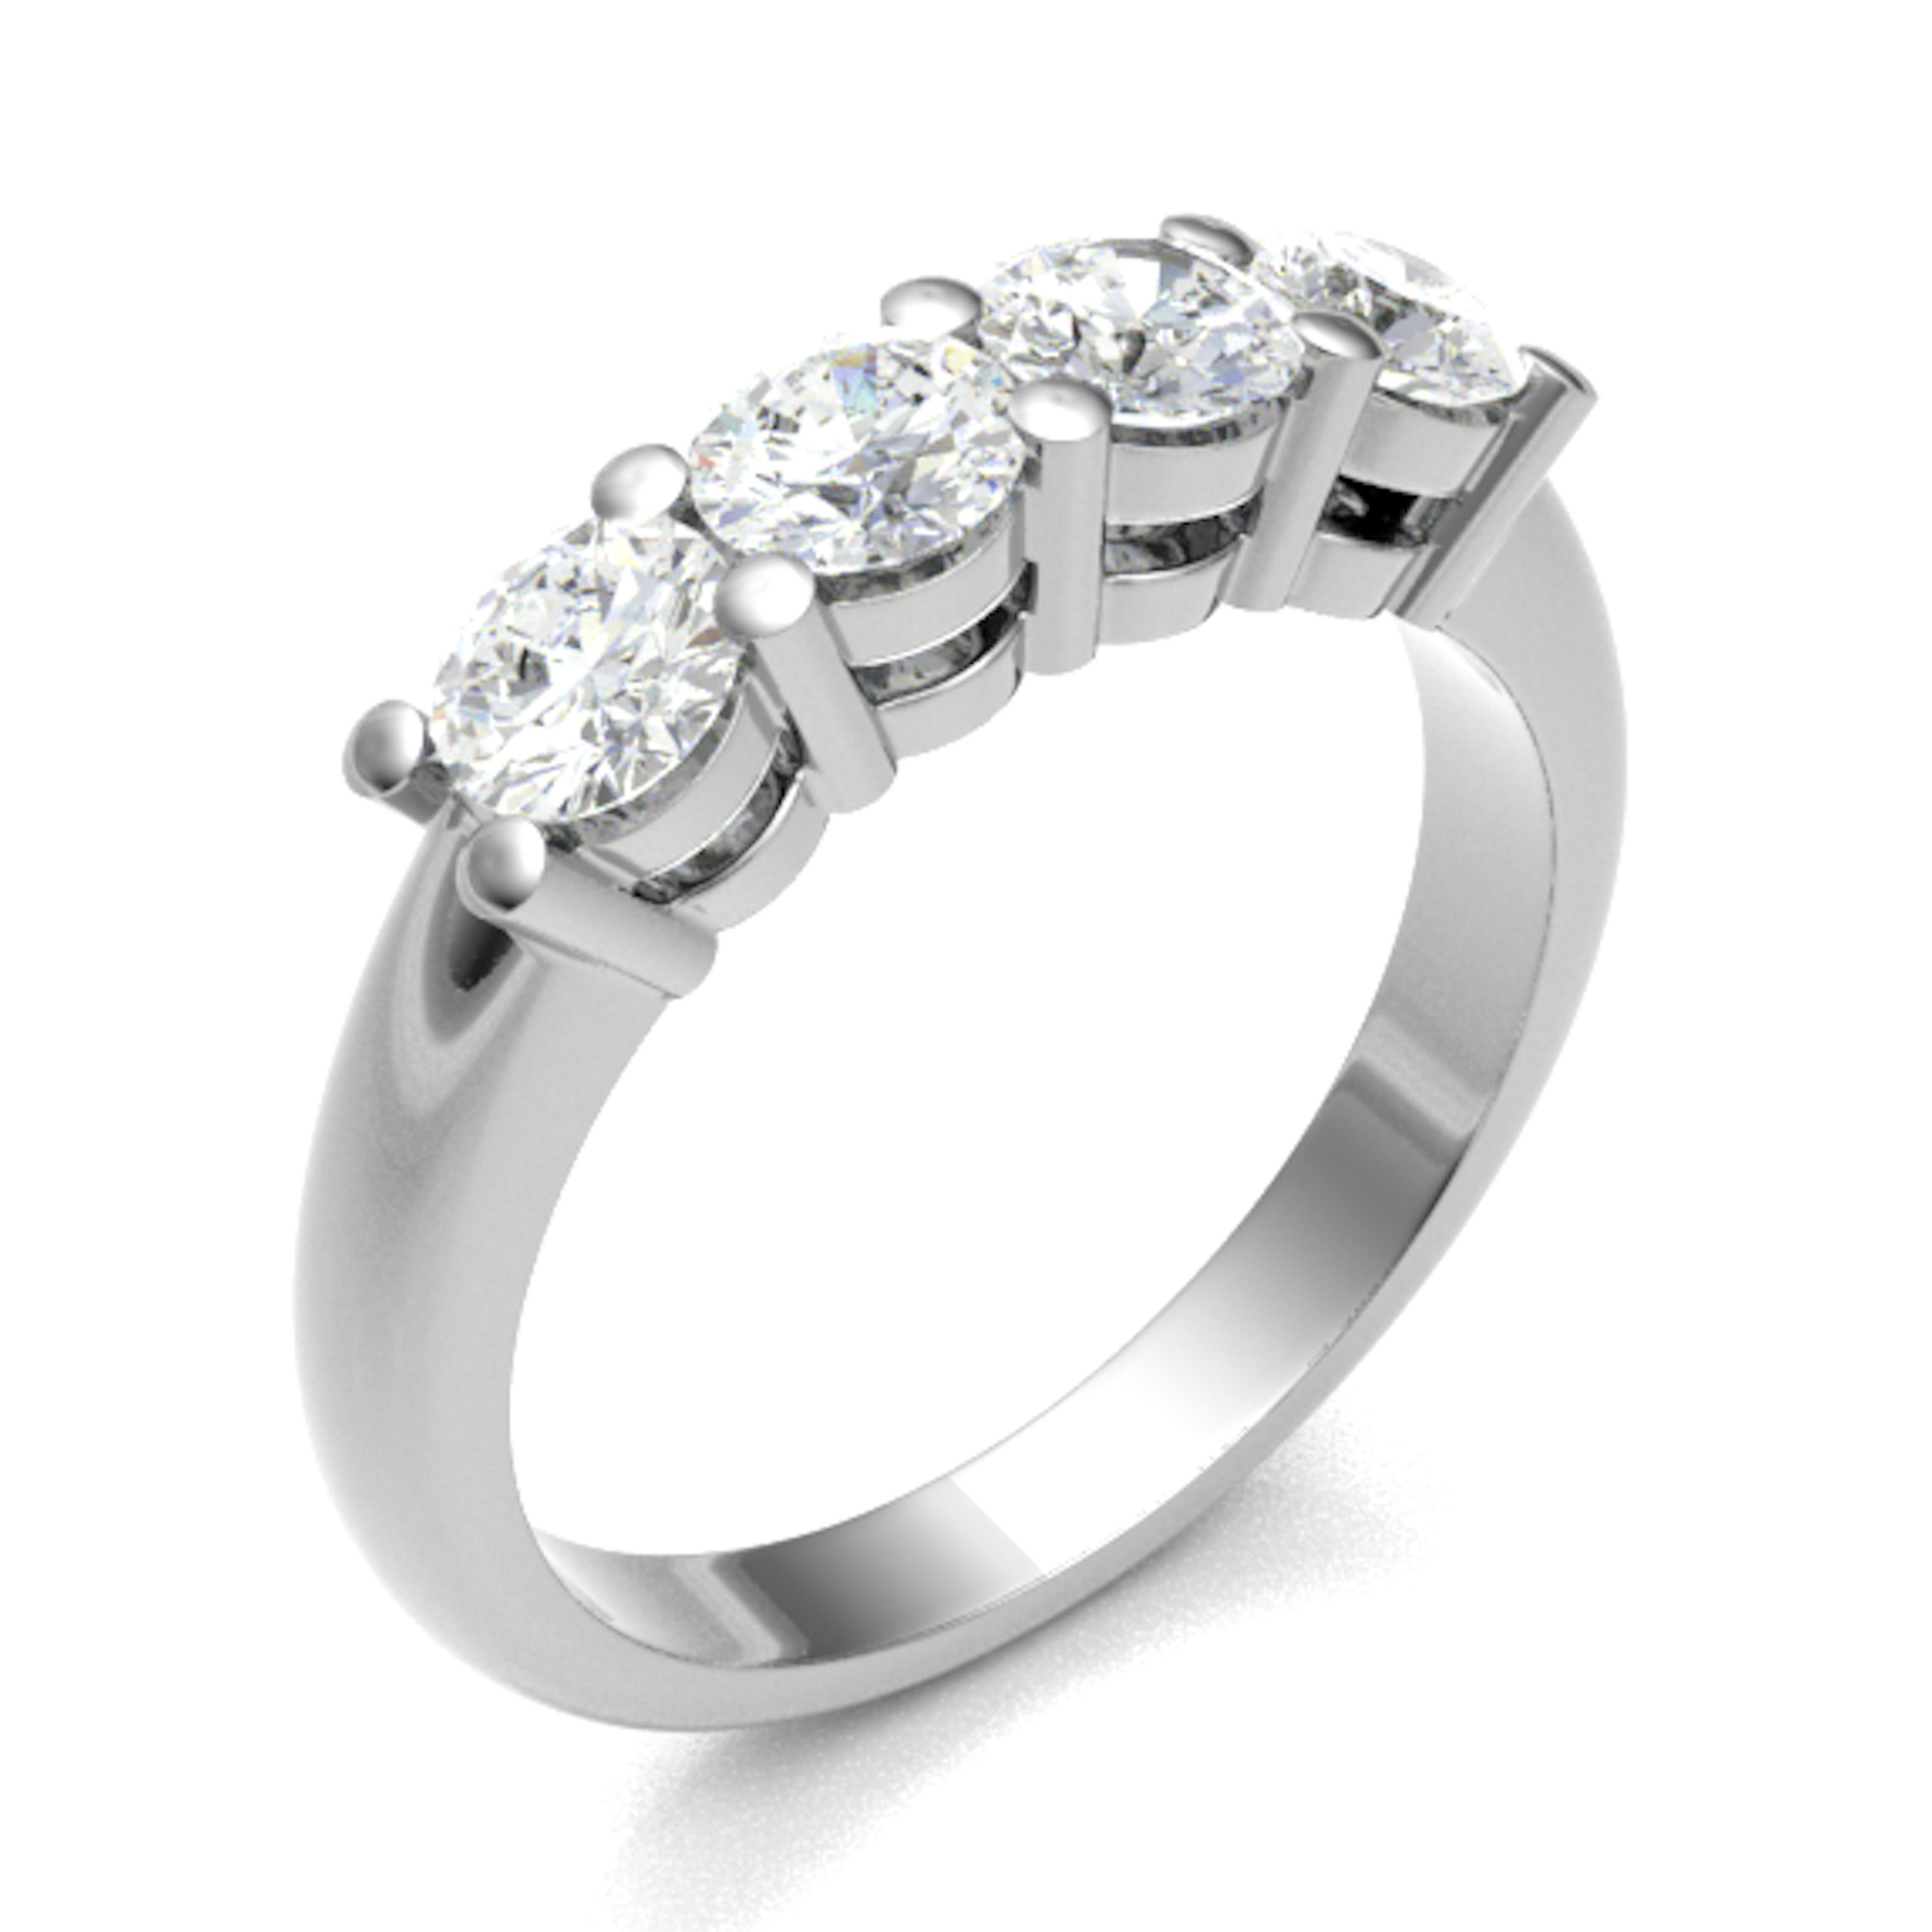 0.16 - 1.00 Carat Lab-Created Anniversary Diamond Rings